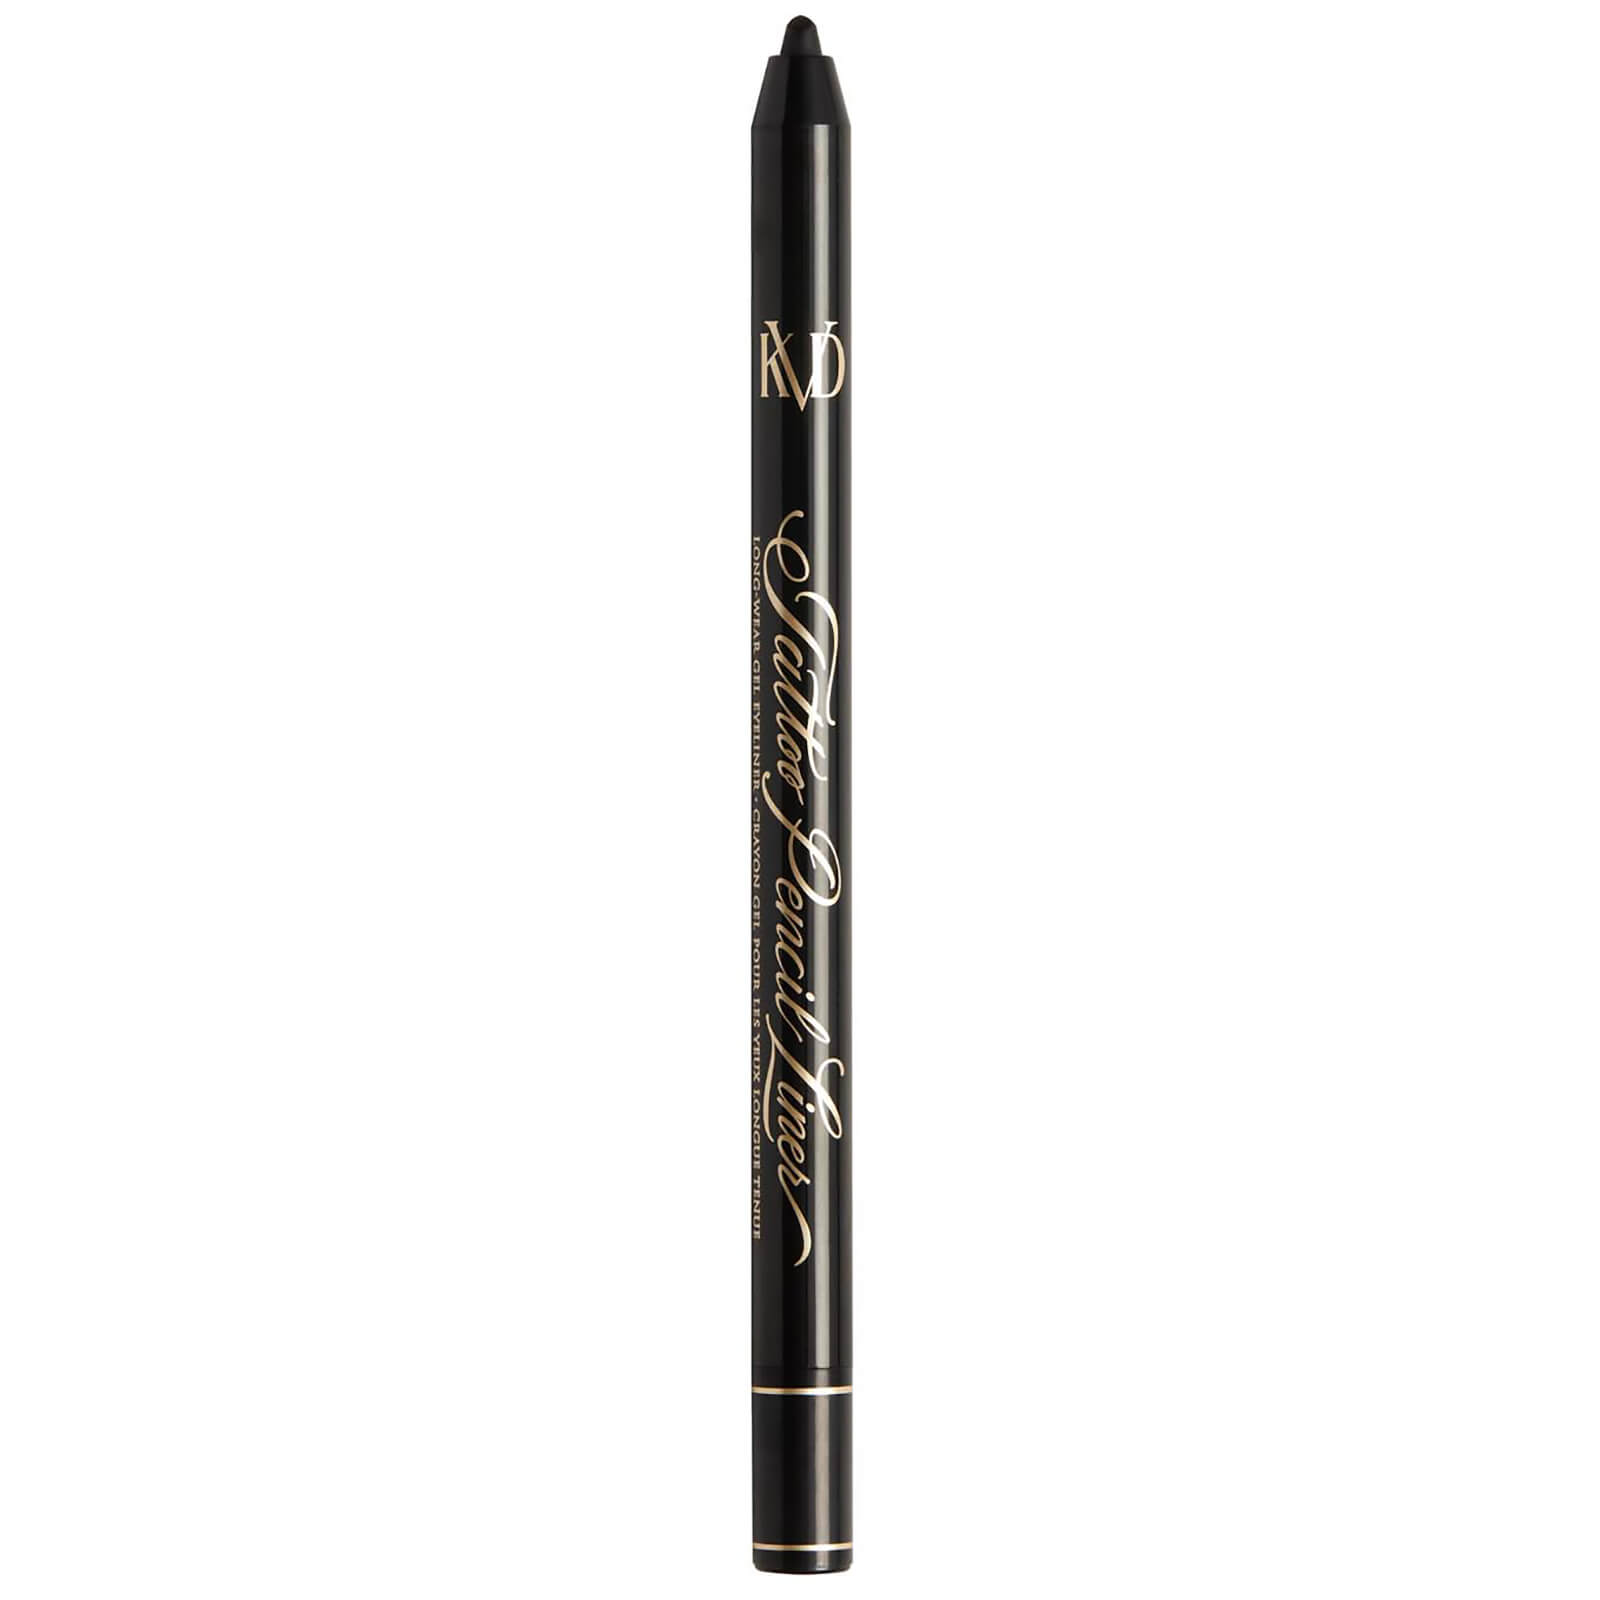 KVD Beauty Tattoo Pencil Liner Long-Wear Gel Eyeliner 0.5g (Various Shades) - Trooper Black